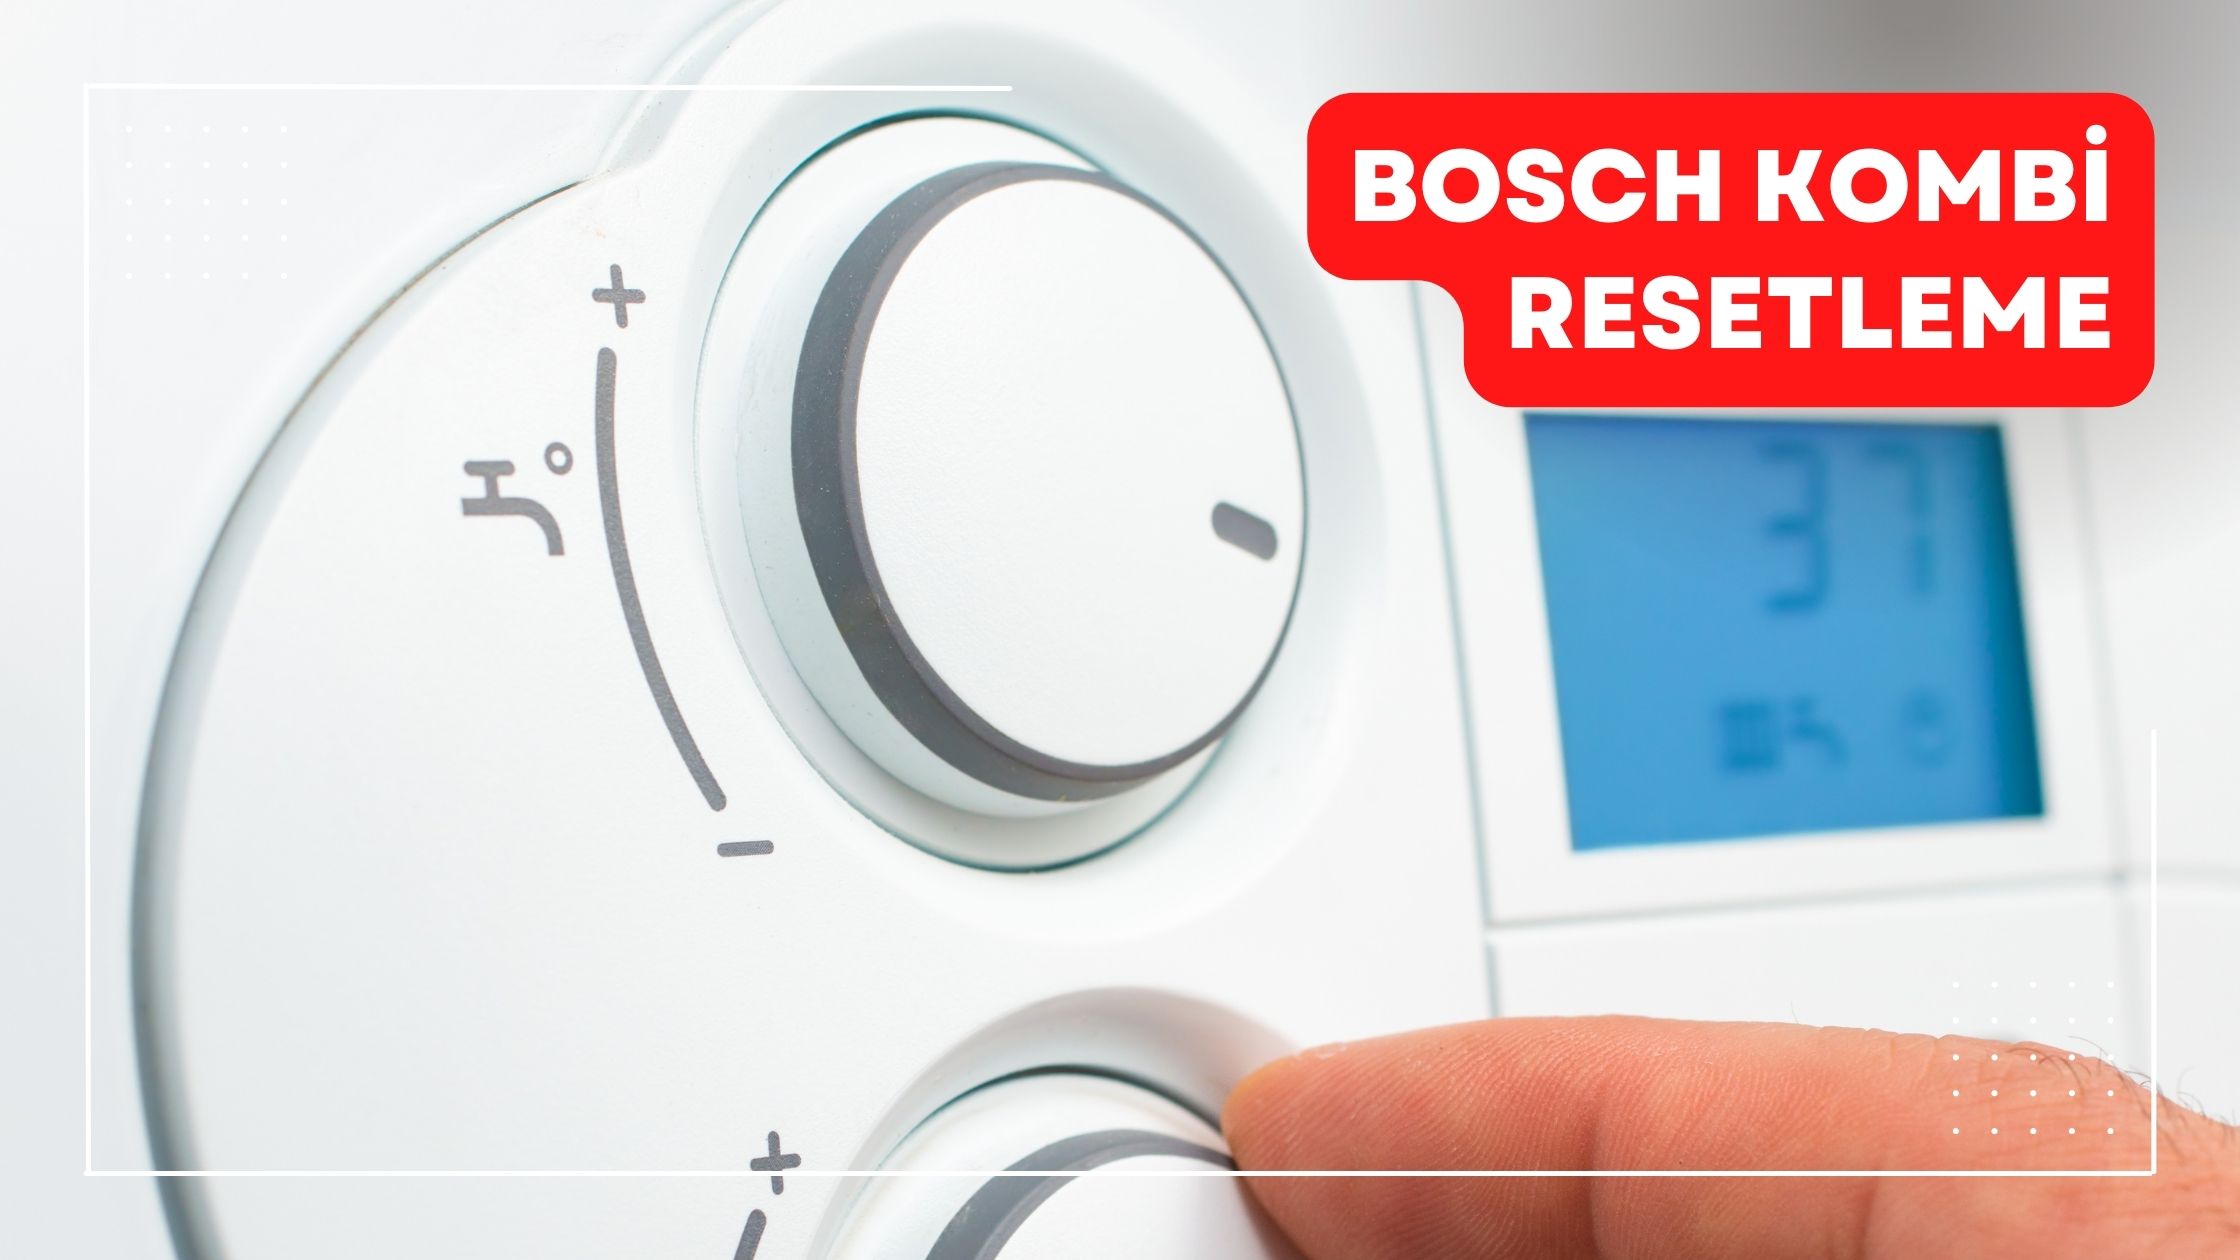 Bosch Kombi Resetleme